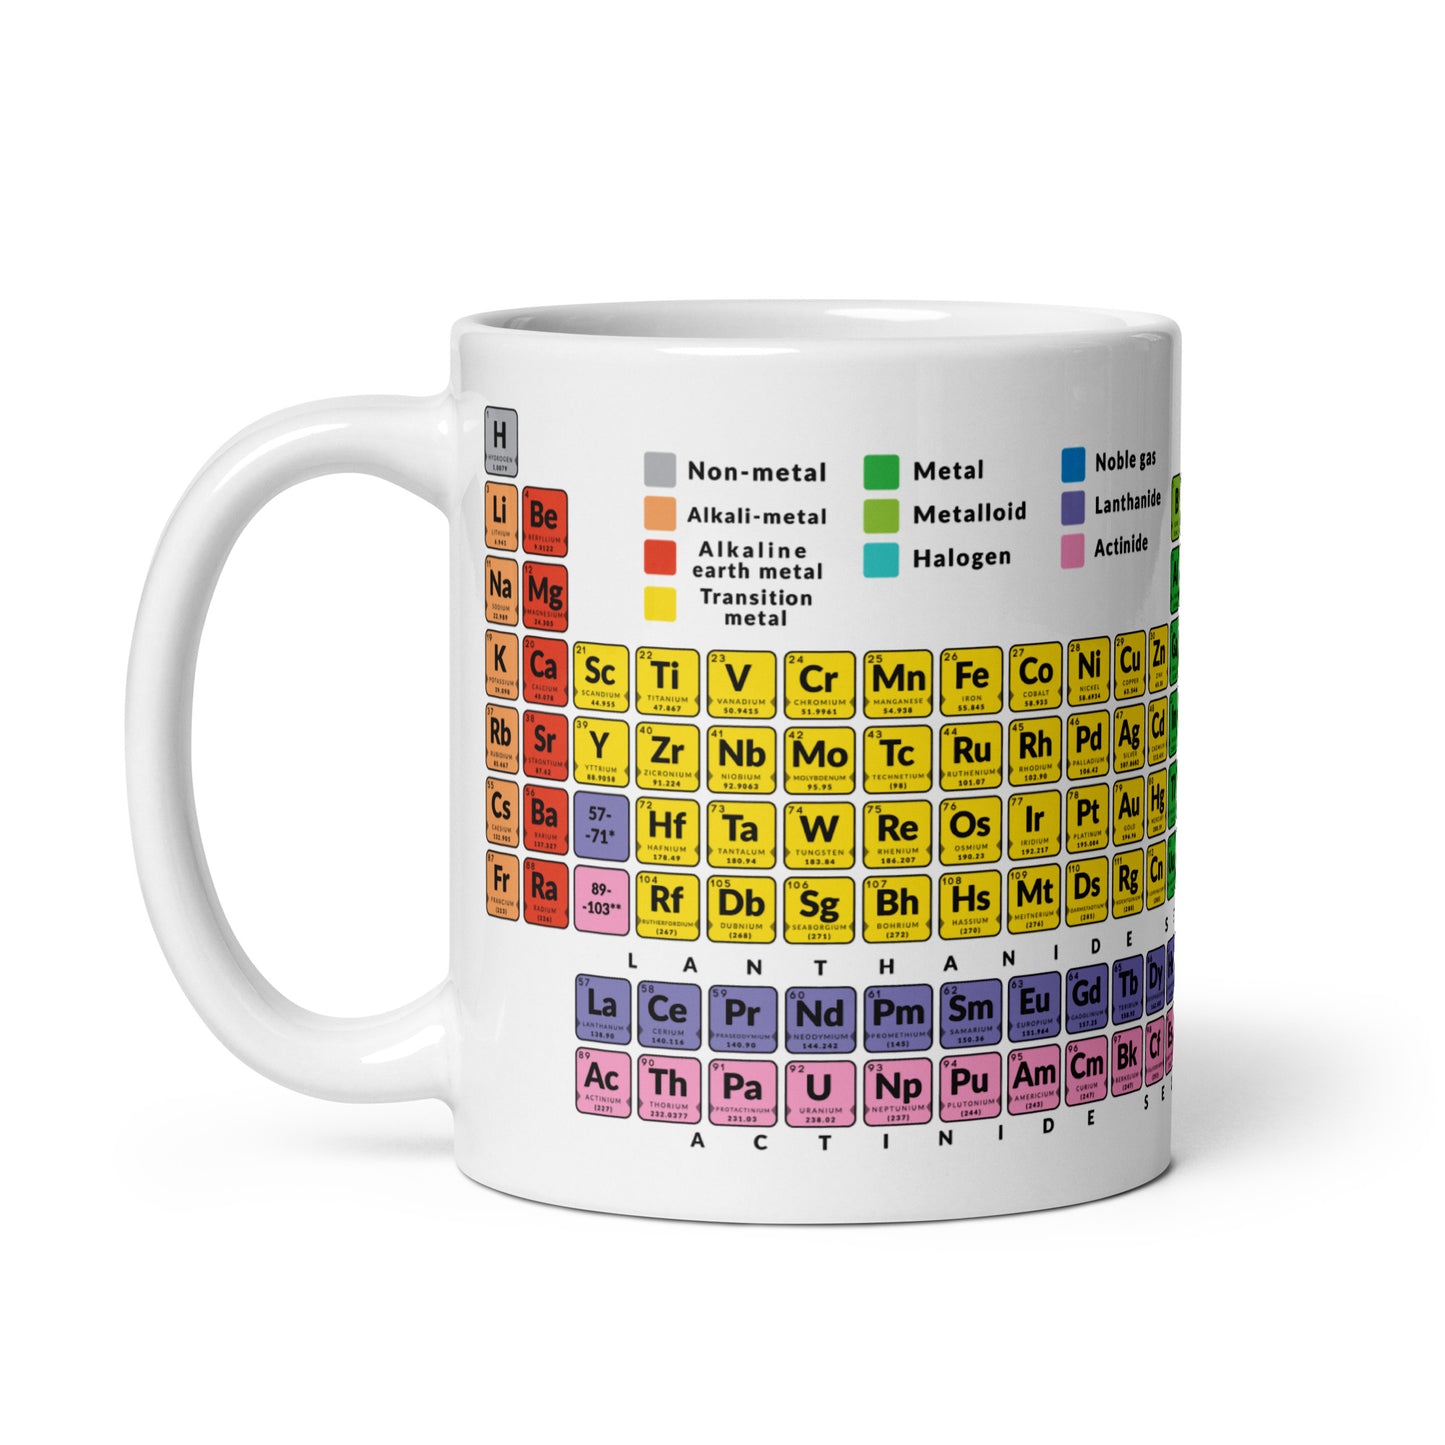 Personalised mug 11 oz with Chemistry Periodic Table Mendeleev 